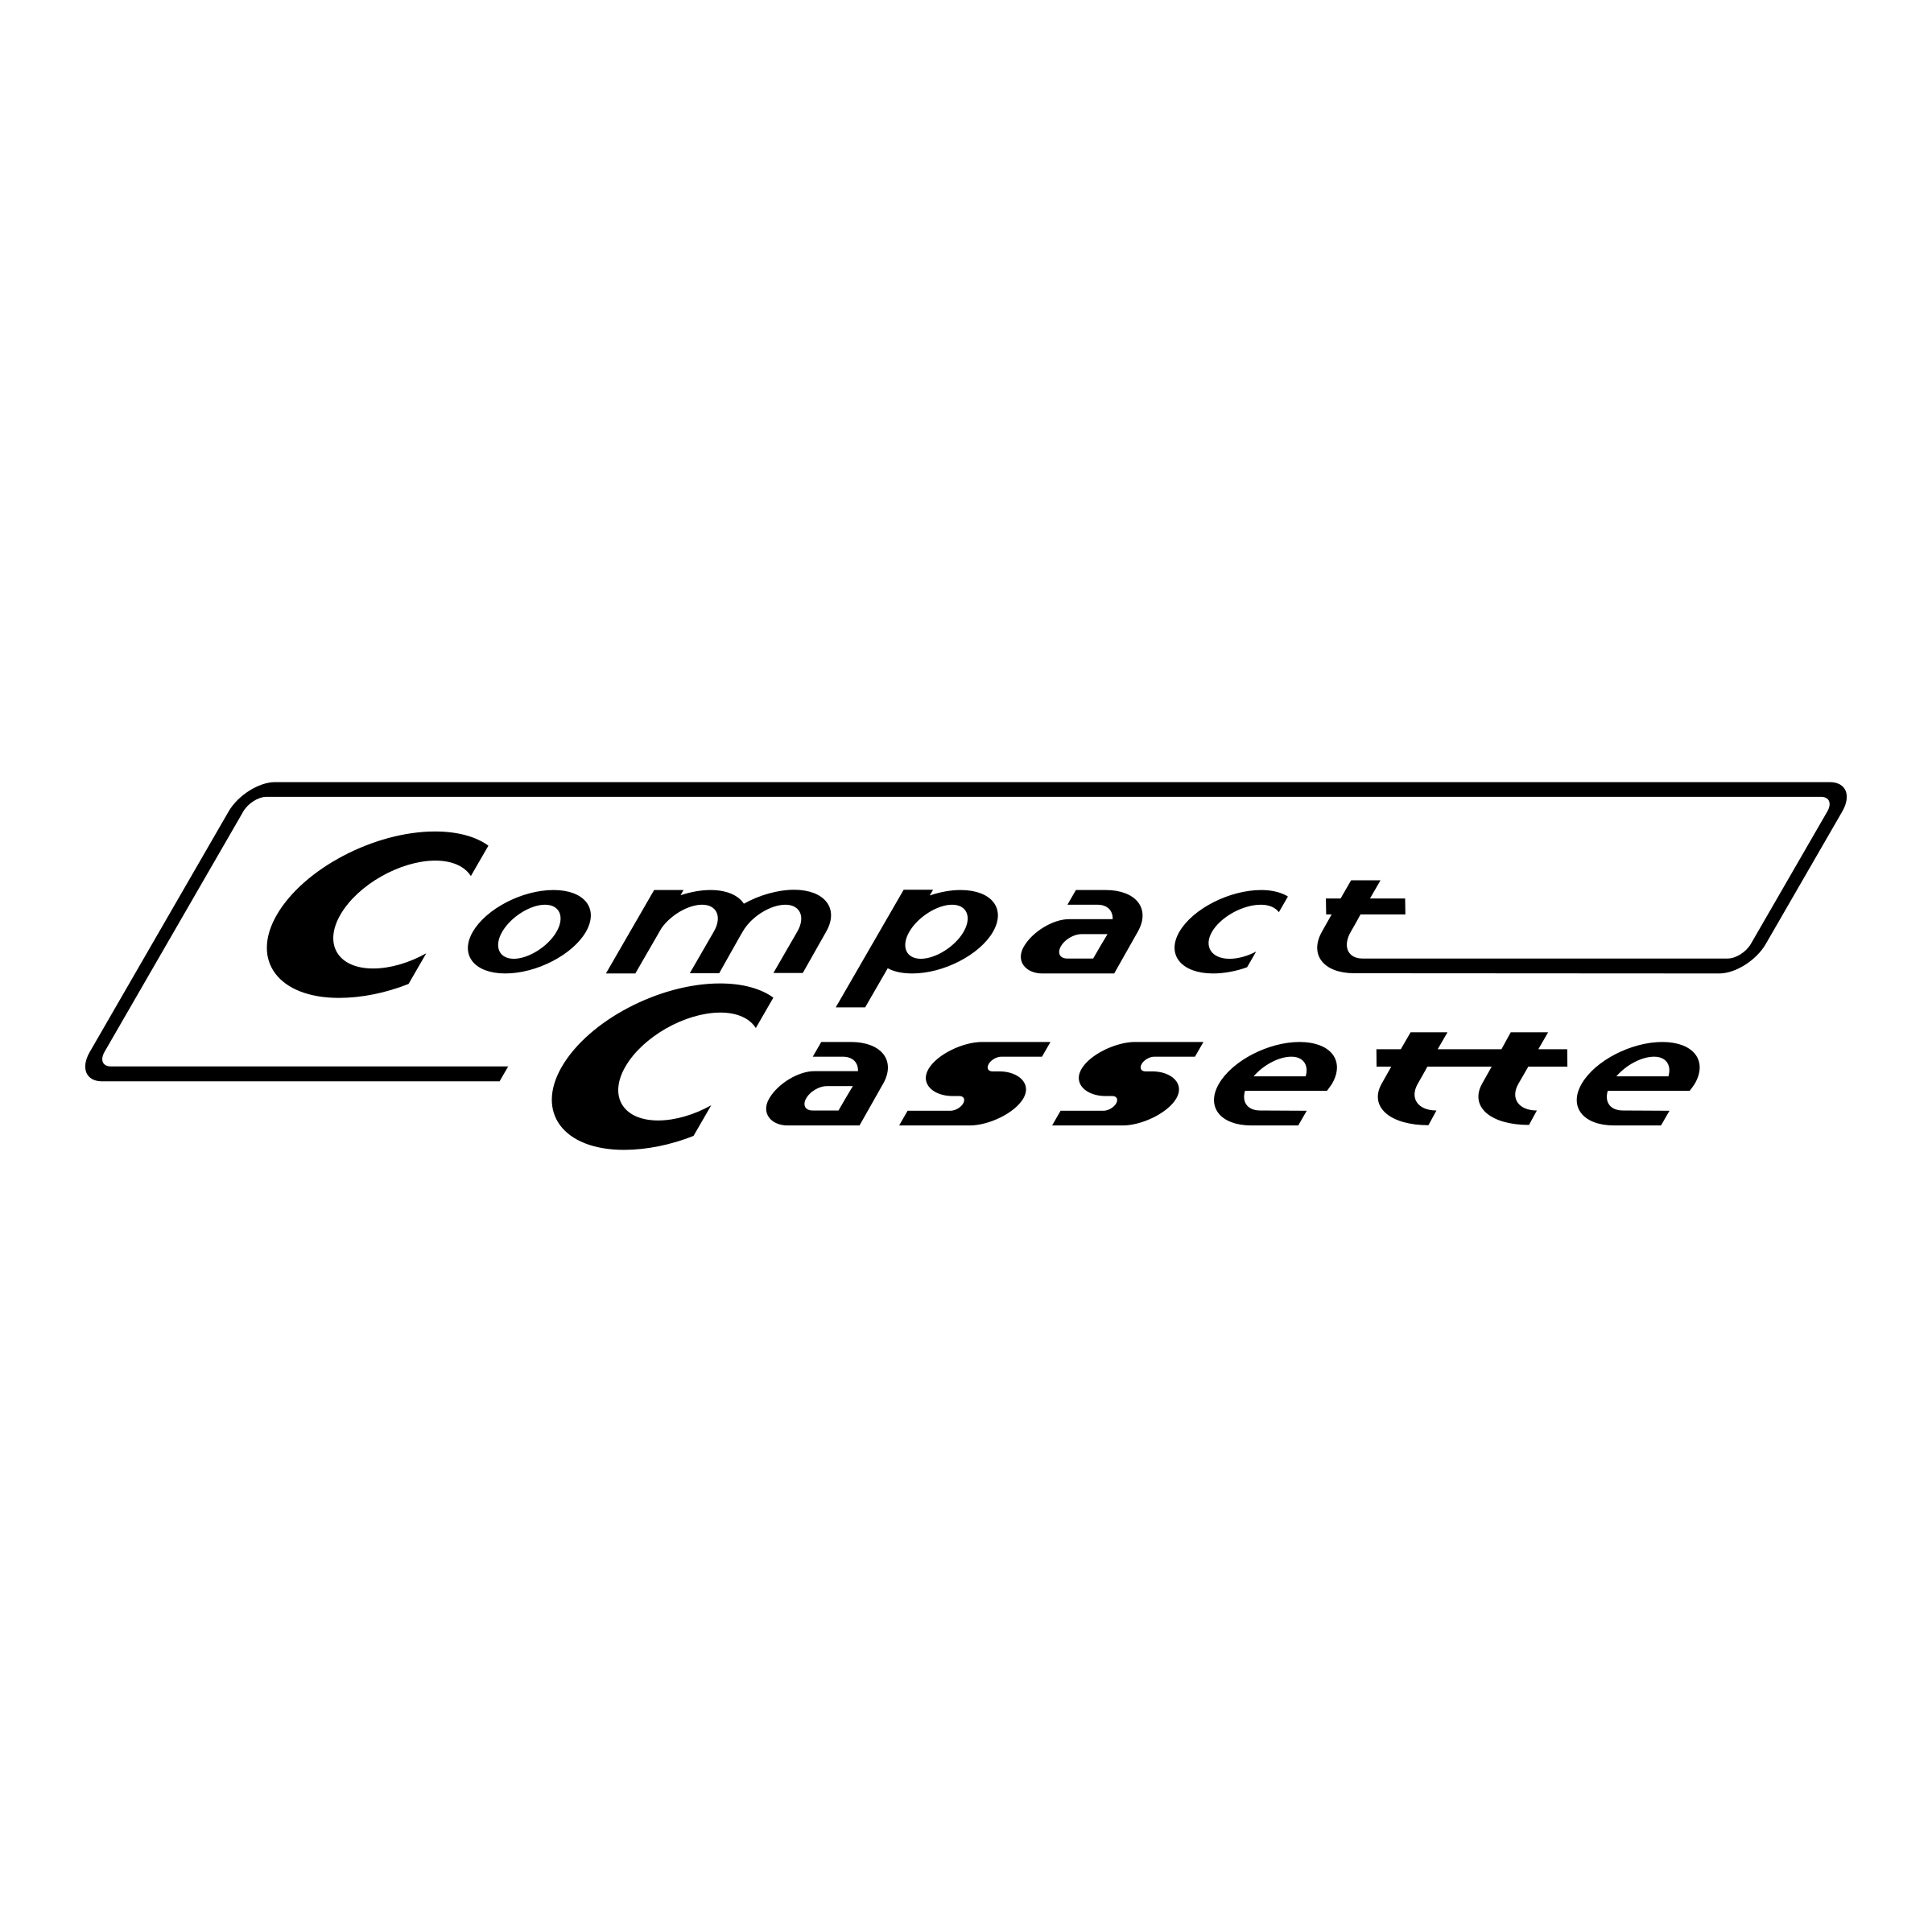 Cassette Logo - Compact Cassette Logo PNG Transparent & SVG Vector - Freebie Supply